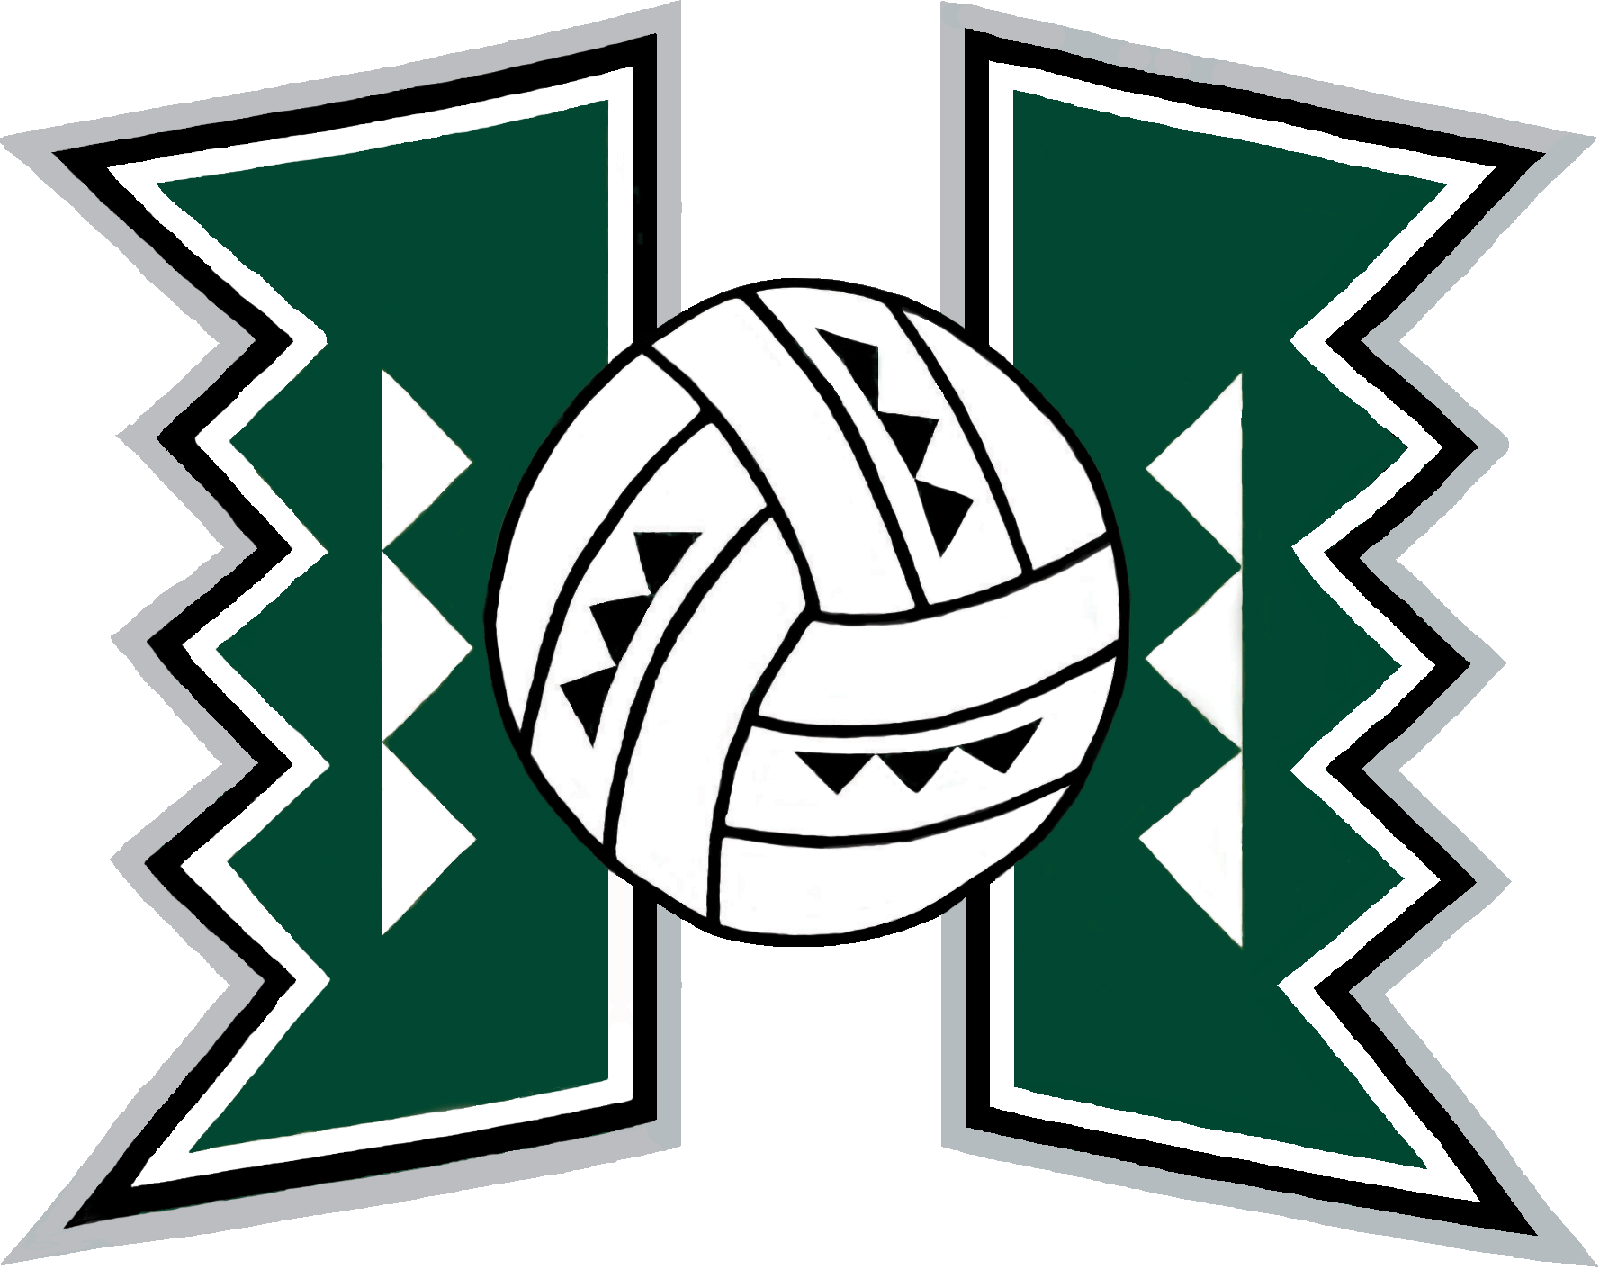 University of hawaii Logos.